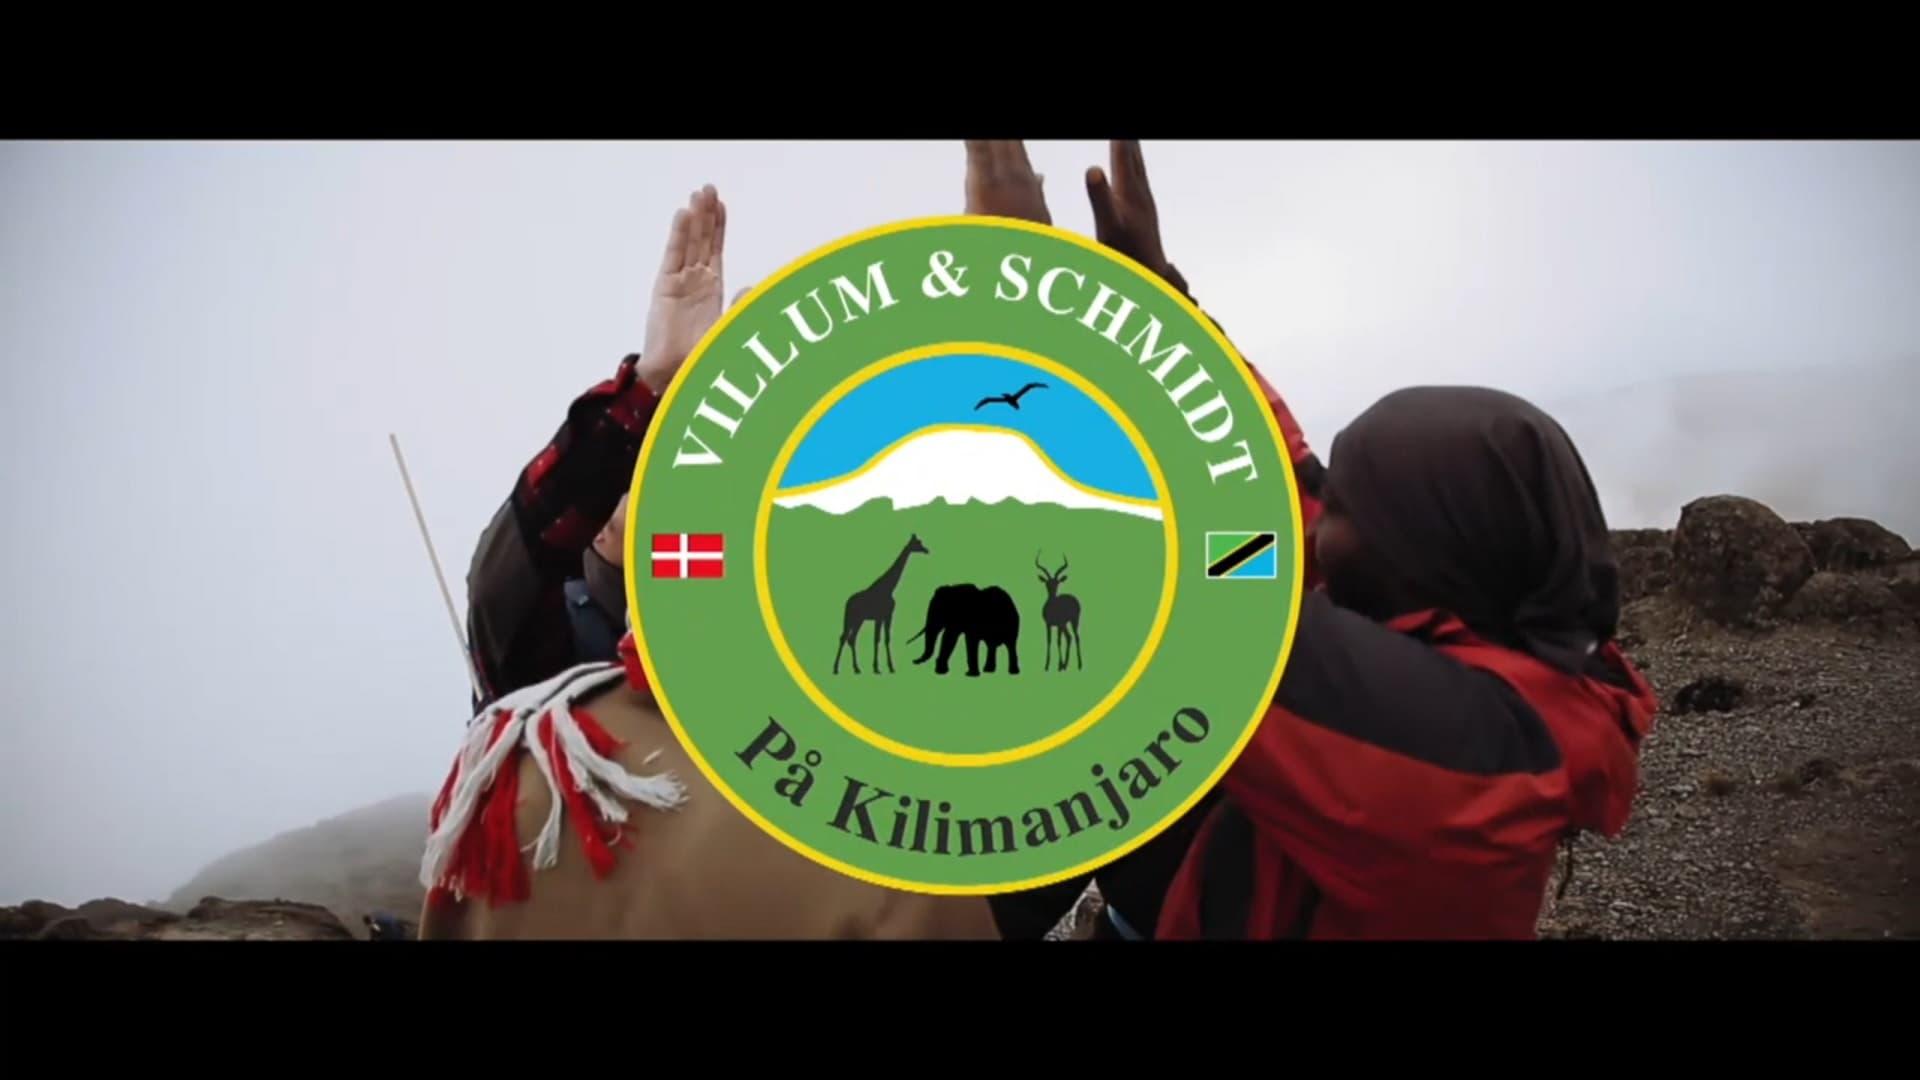 Villum & Schmidt på Kilimanjaro backdrop